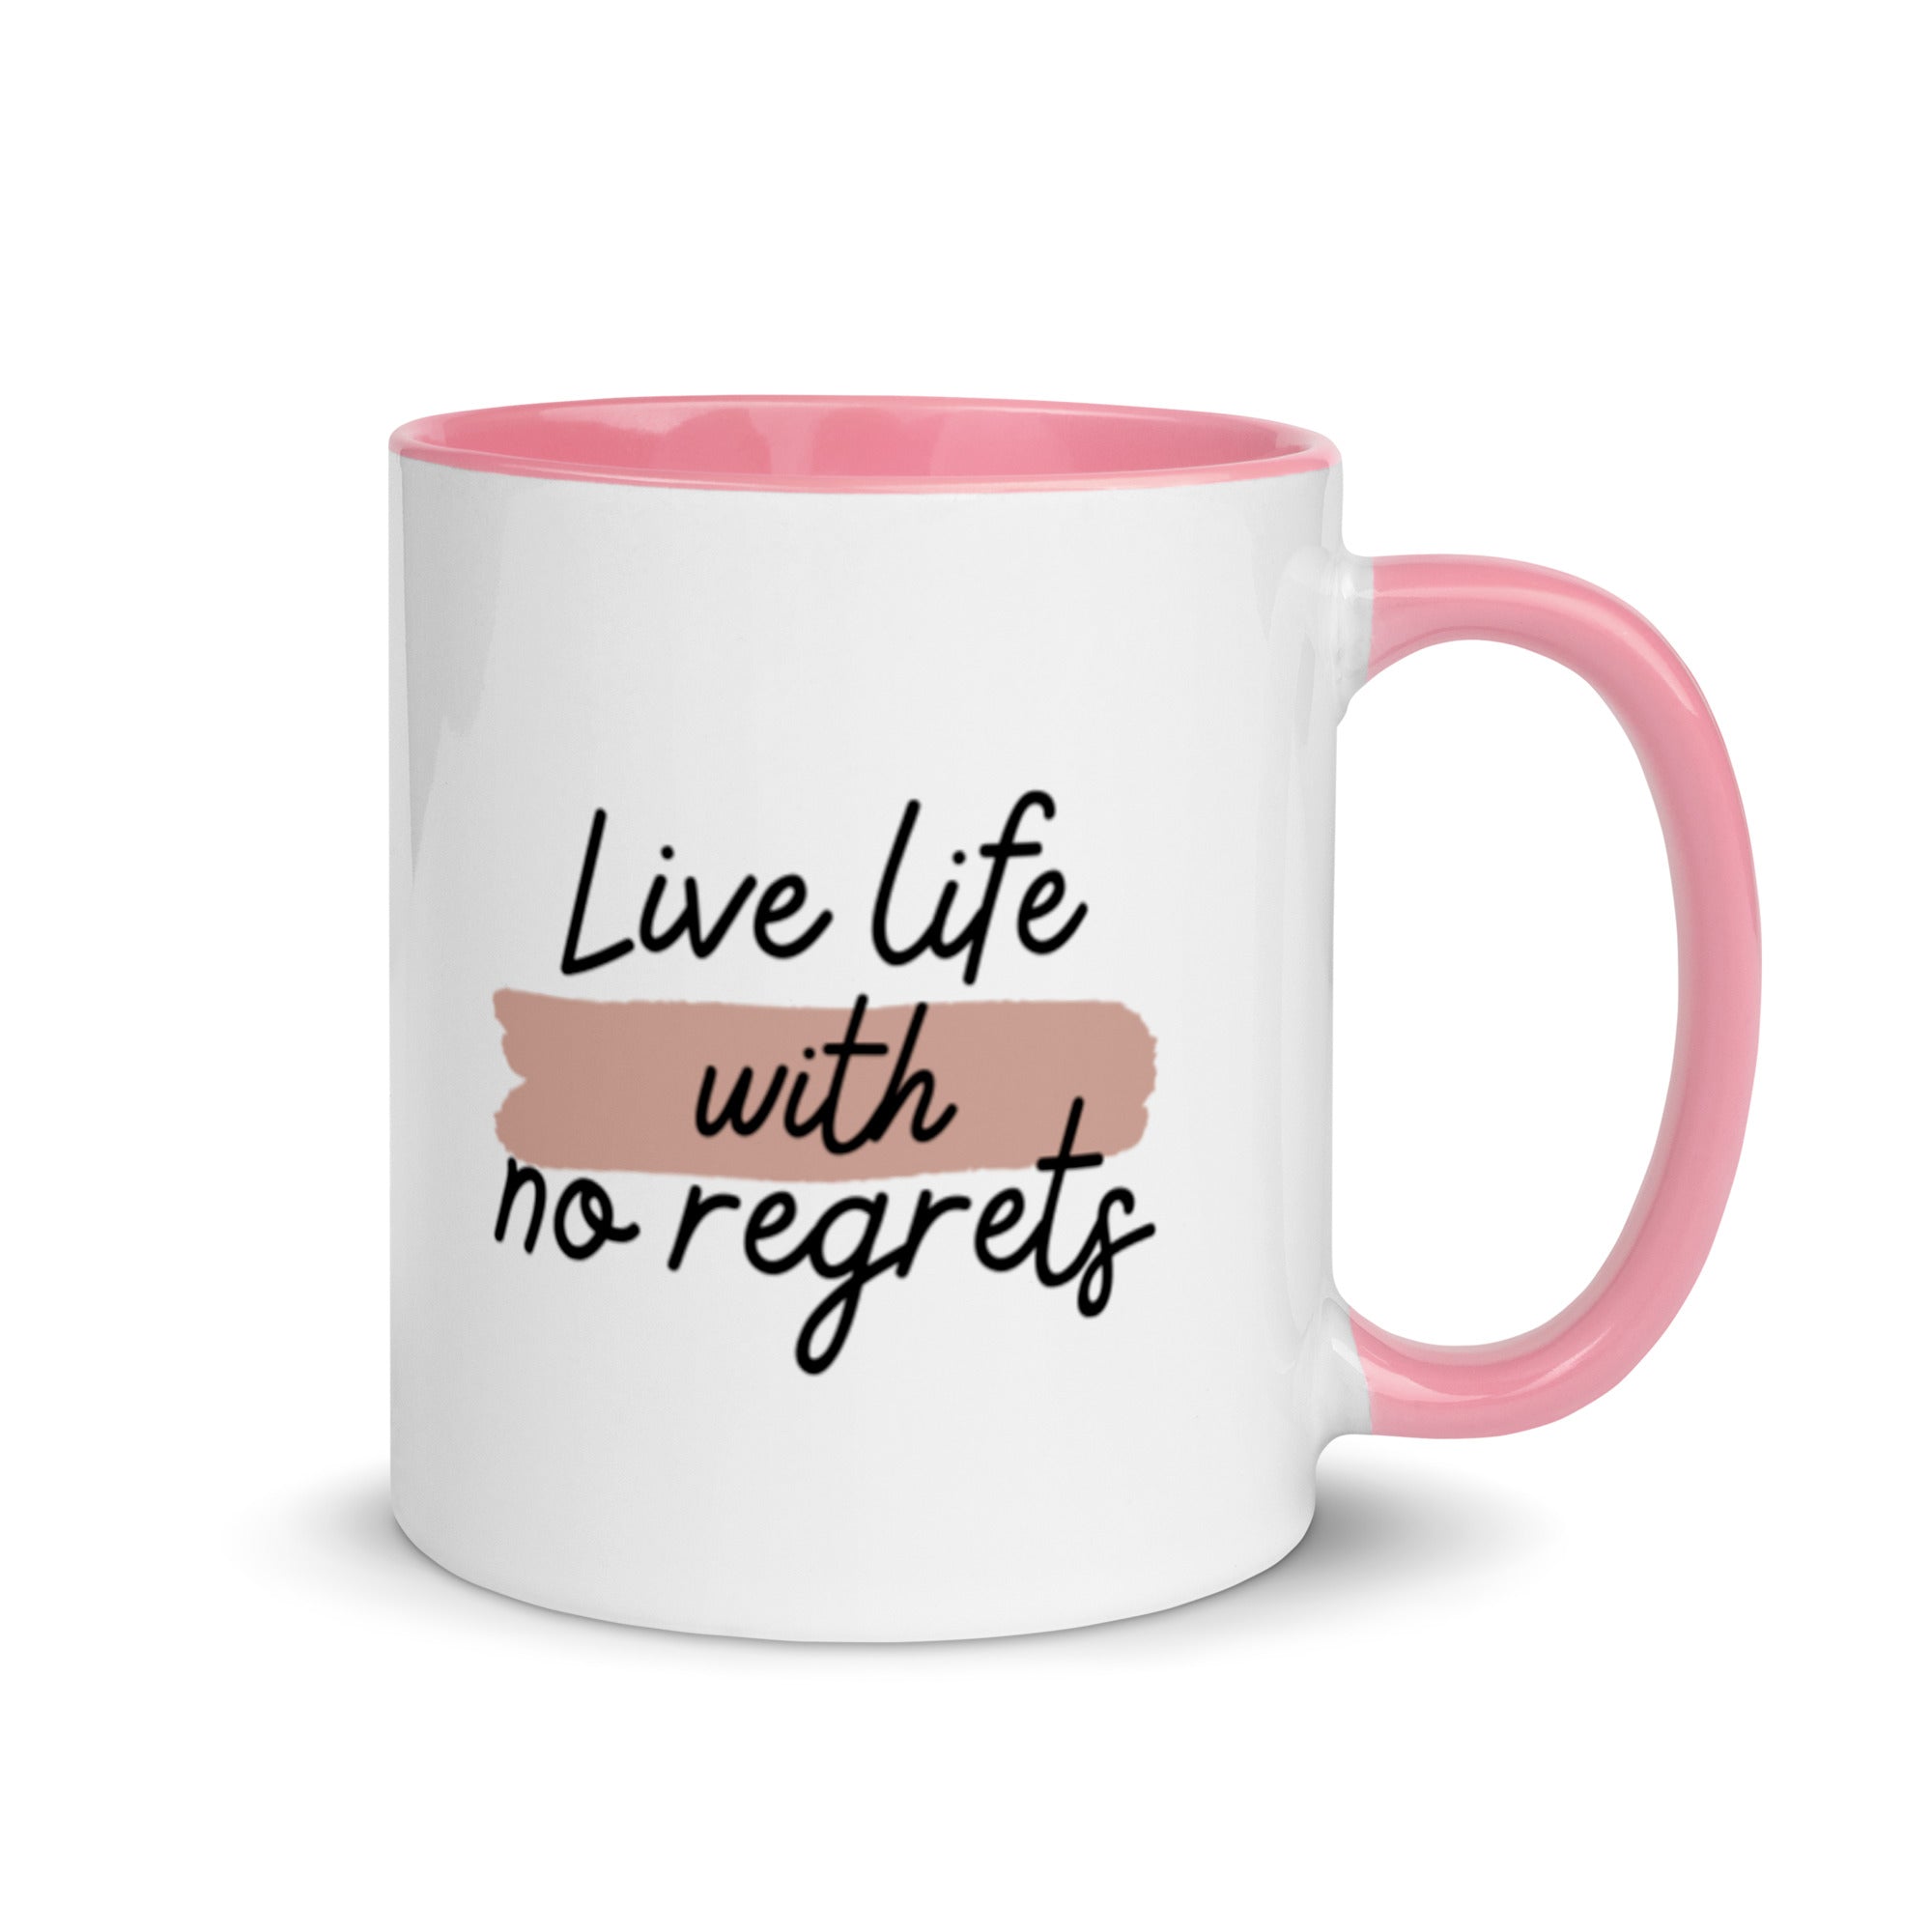 Live Life With No Regrets - Mug with Color Inside